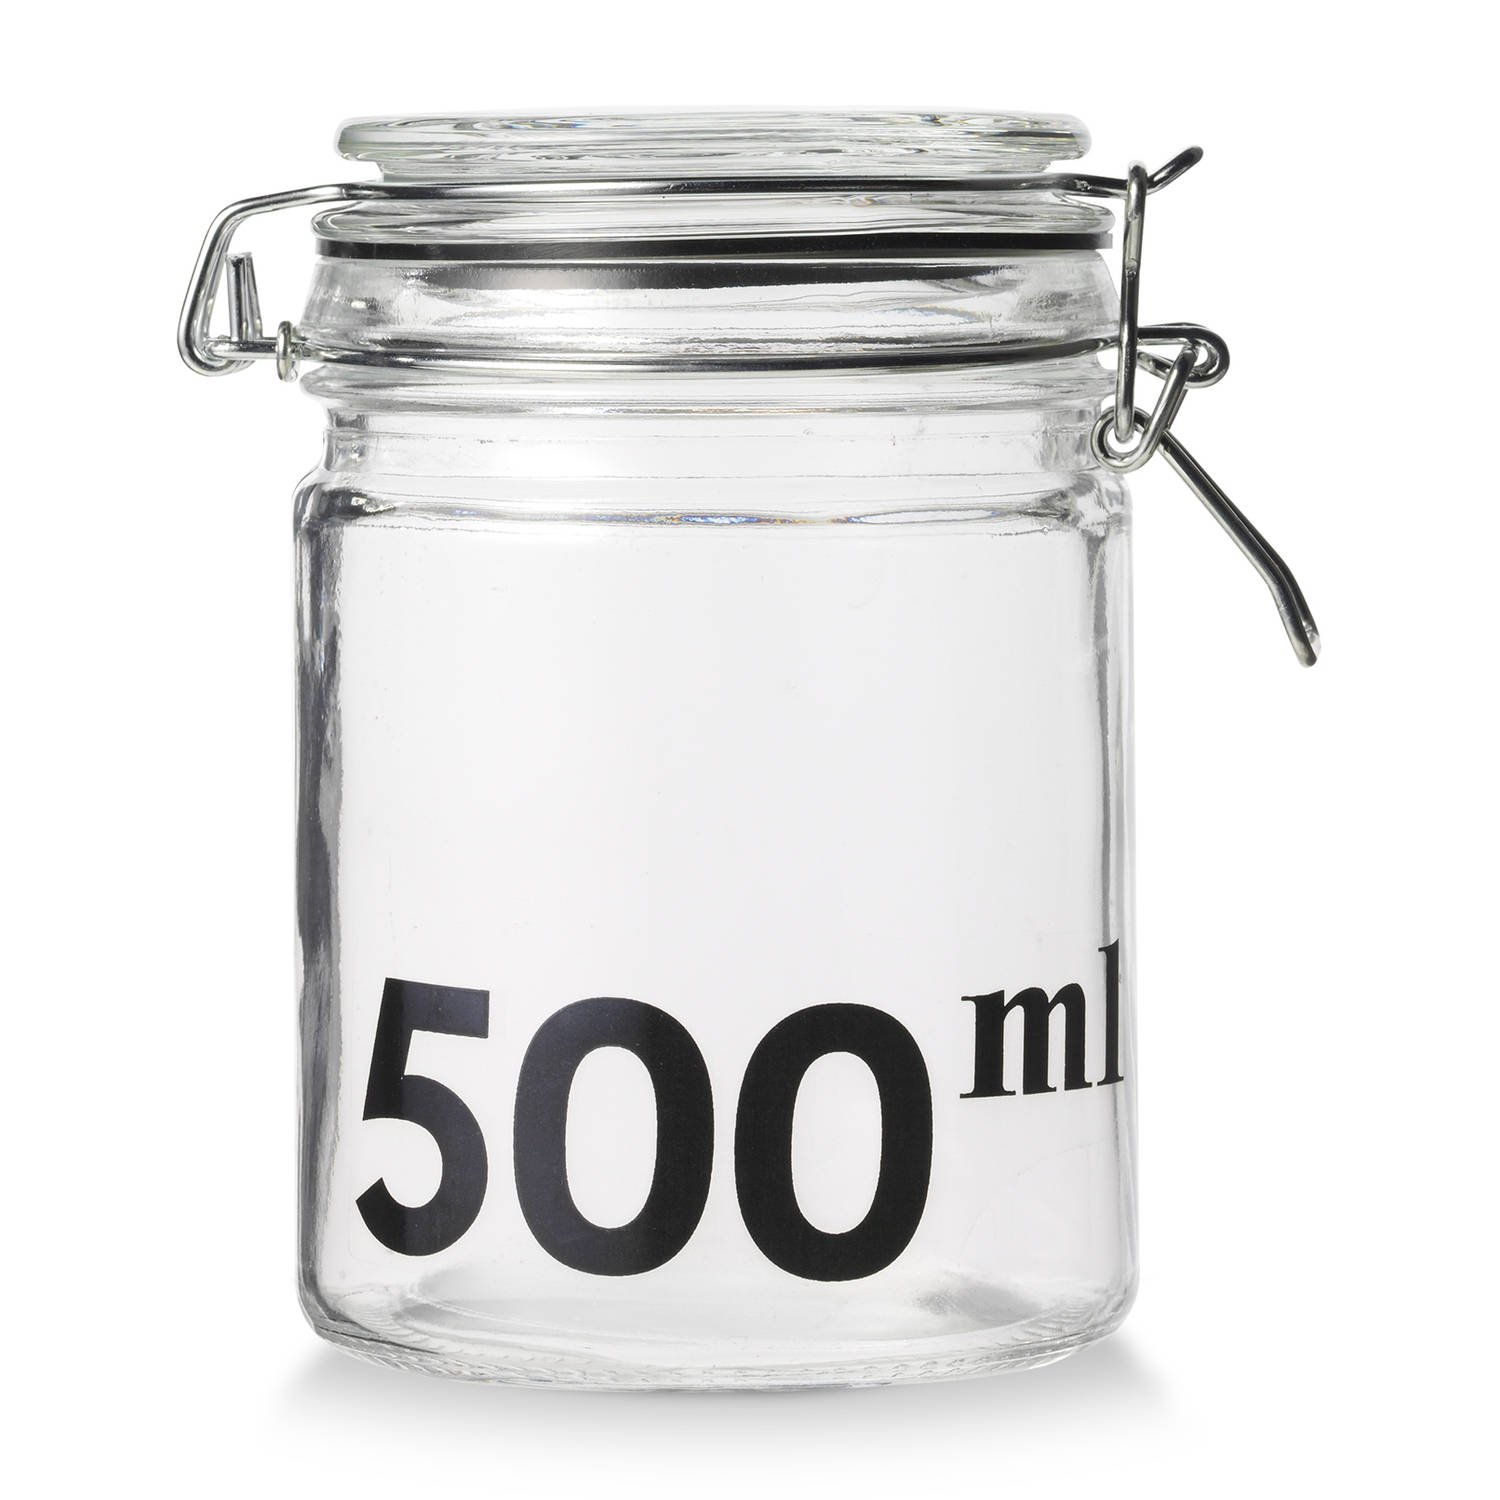 voorraadpot klemdeksel - 500 ml | Blokker